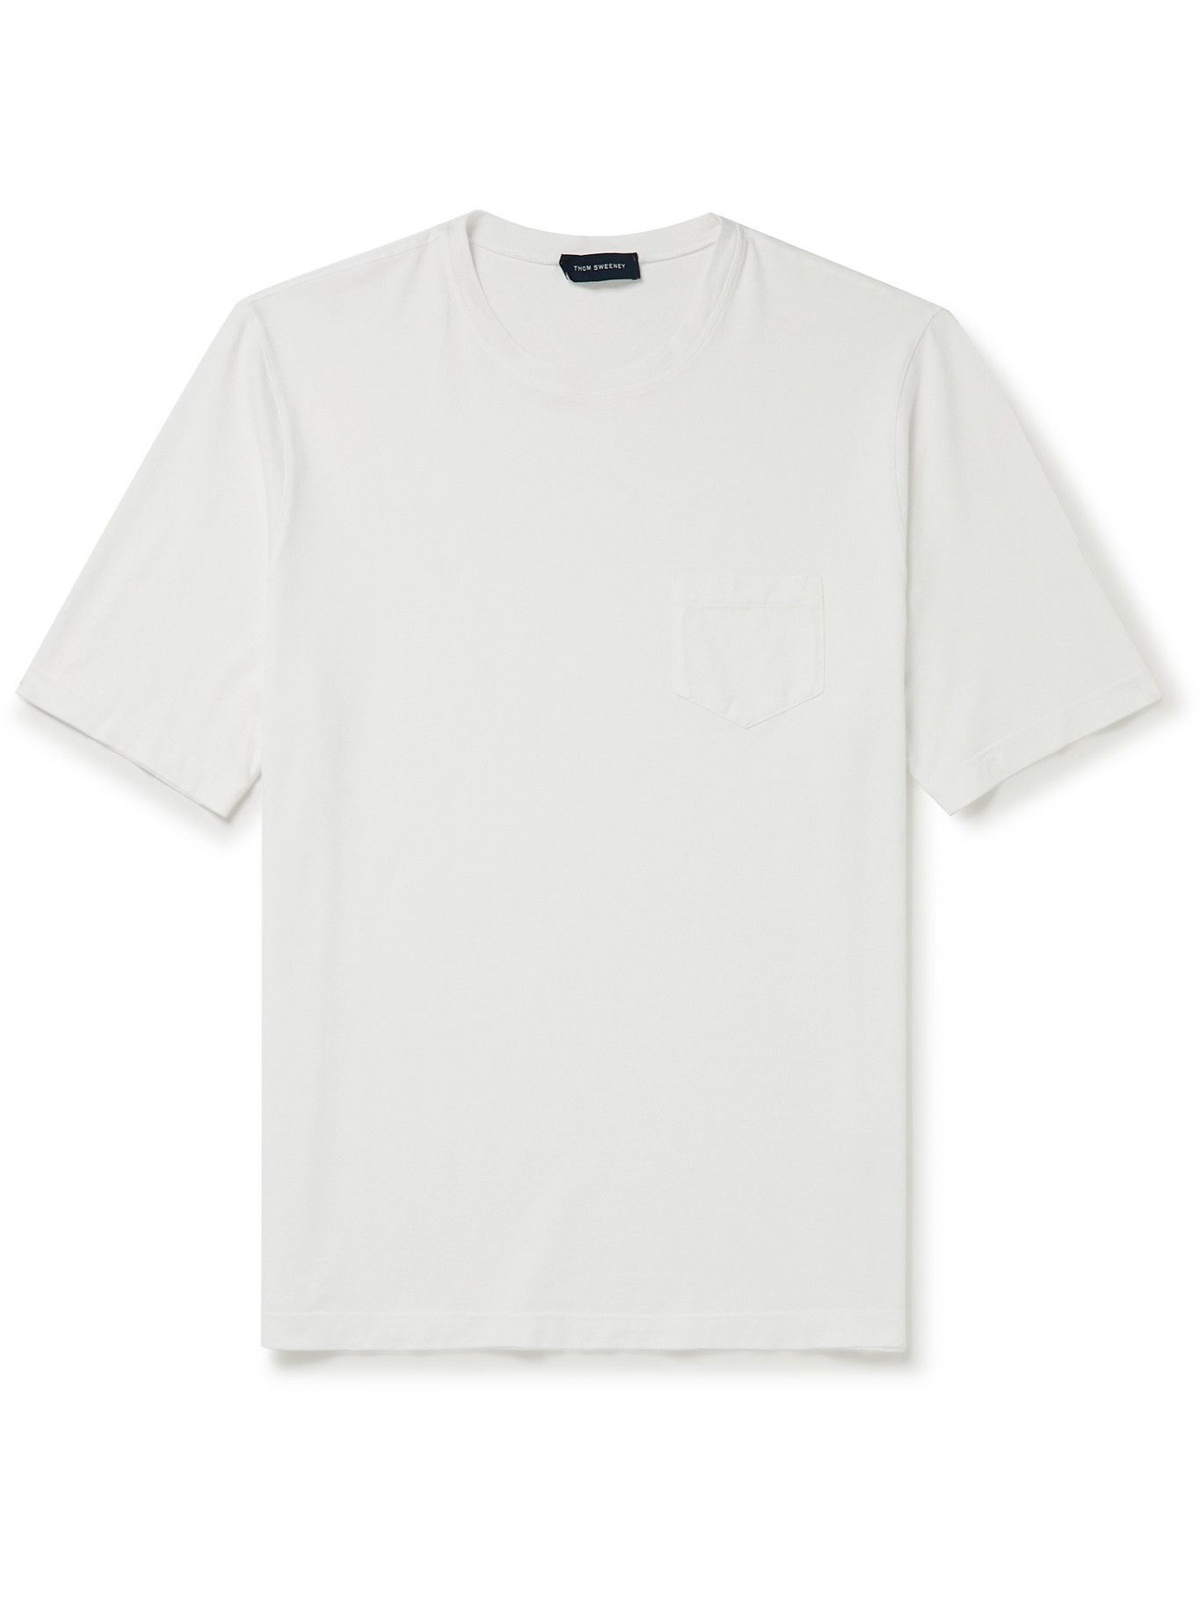 THOM SWEENEY - Cotton-Jersey T-Shirt - White Thom Sweeney